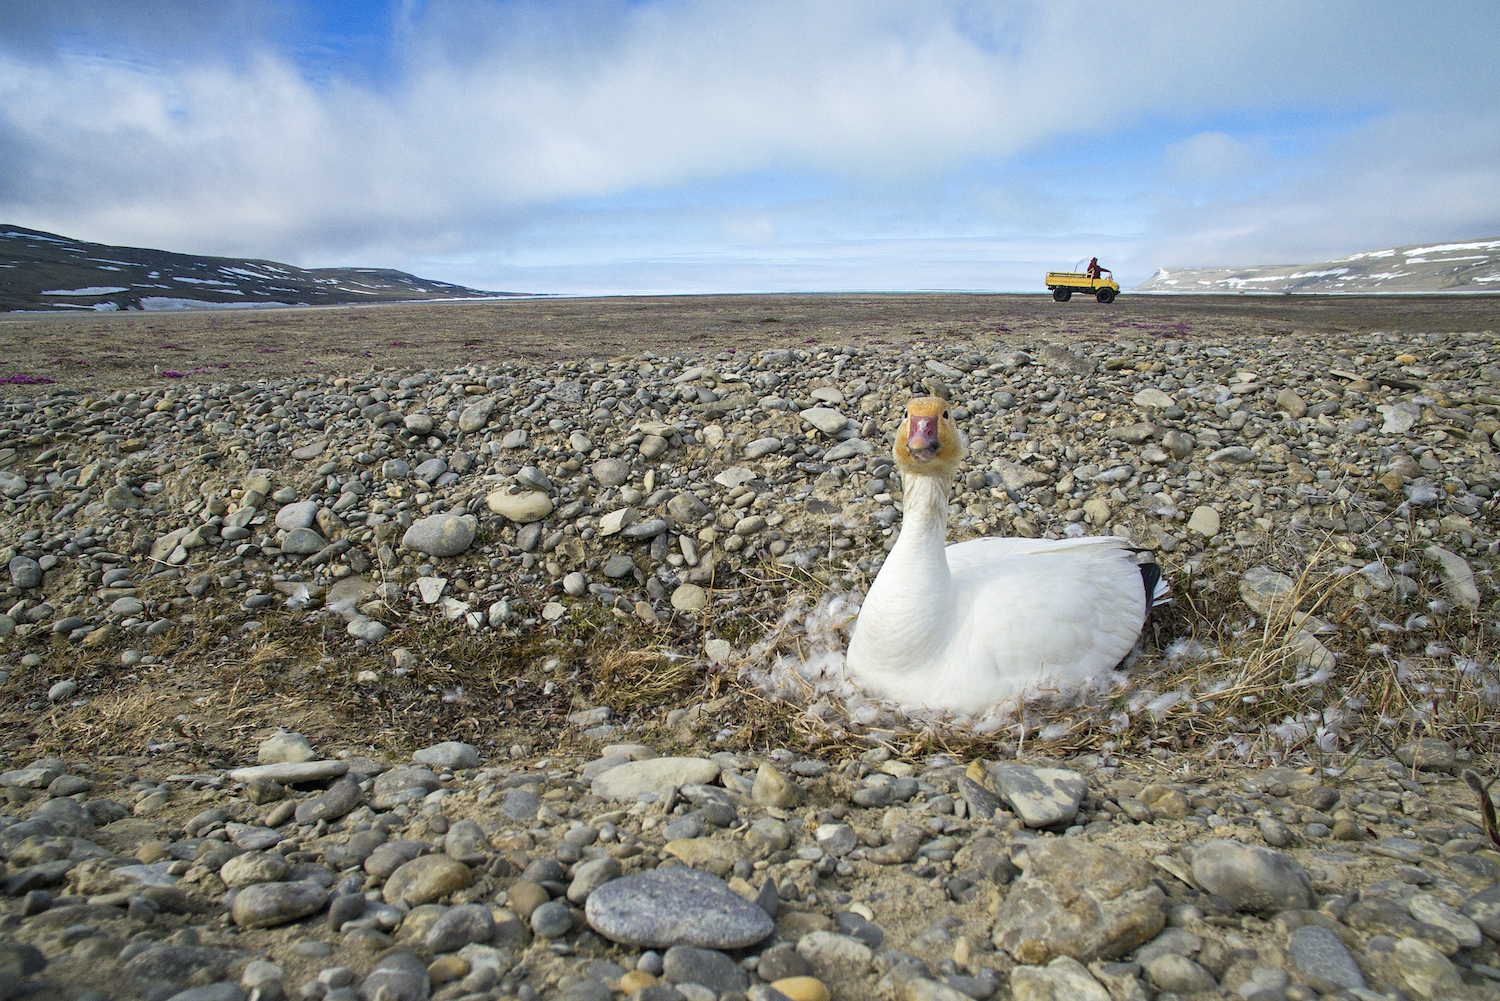 Snow goose nesting on the tundra near Arctic Watch